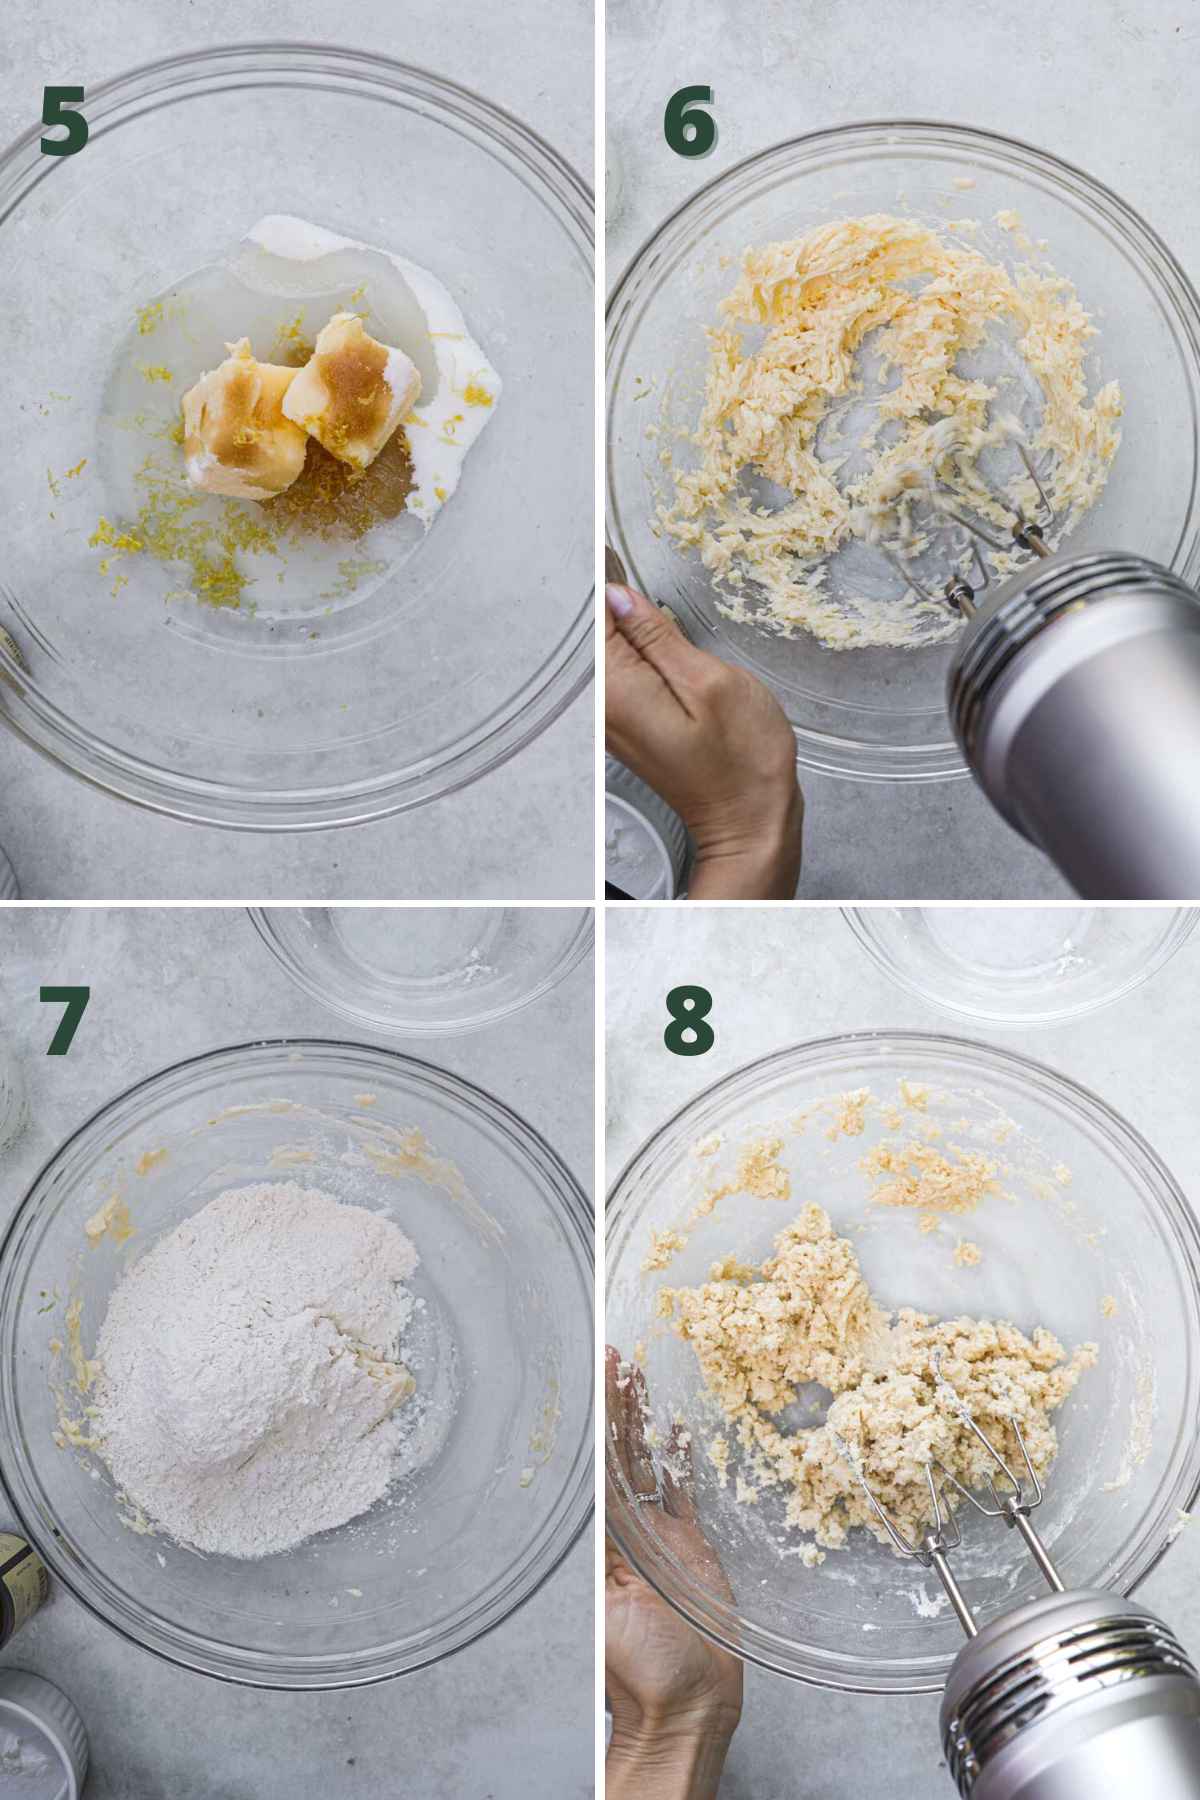 Steps to make edible flower shortbread cookies, including whisking butter, lemon juice and zest, sugar, flour, and kosher salt until it forms a dough.